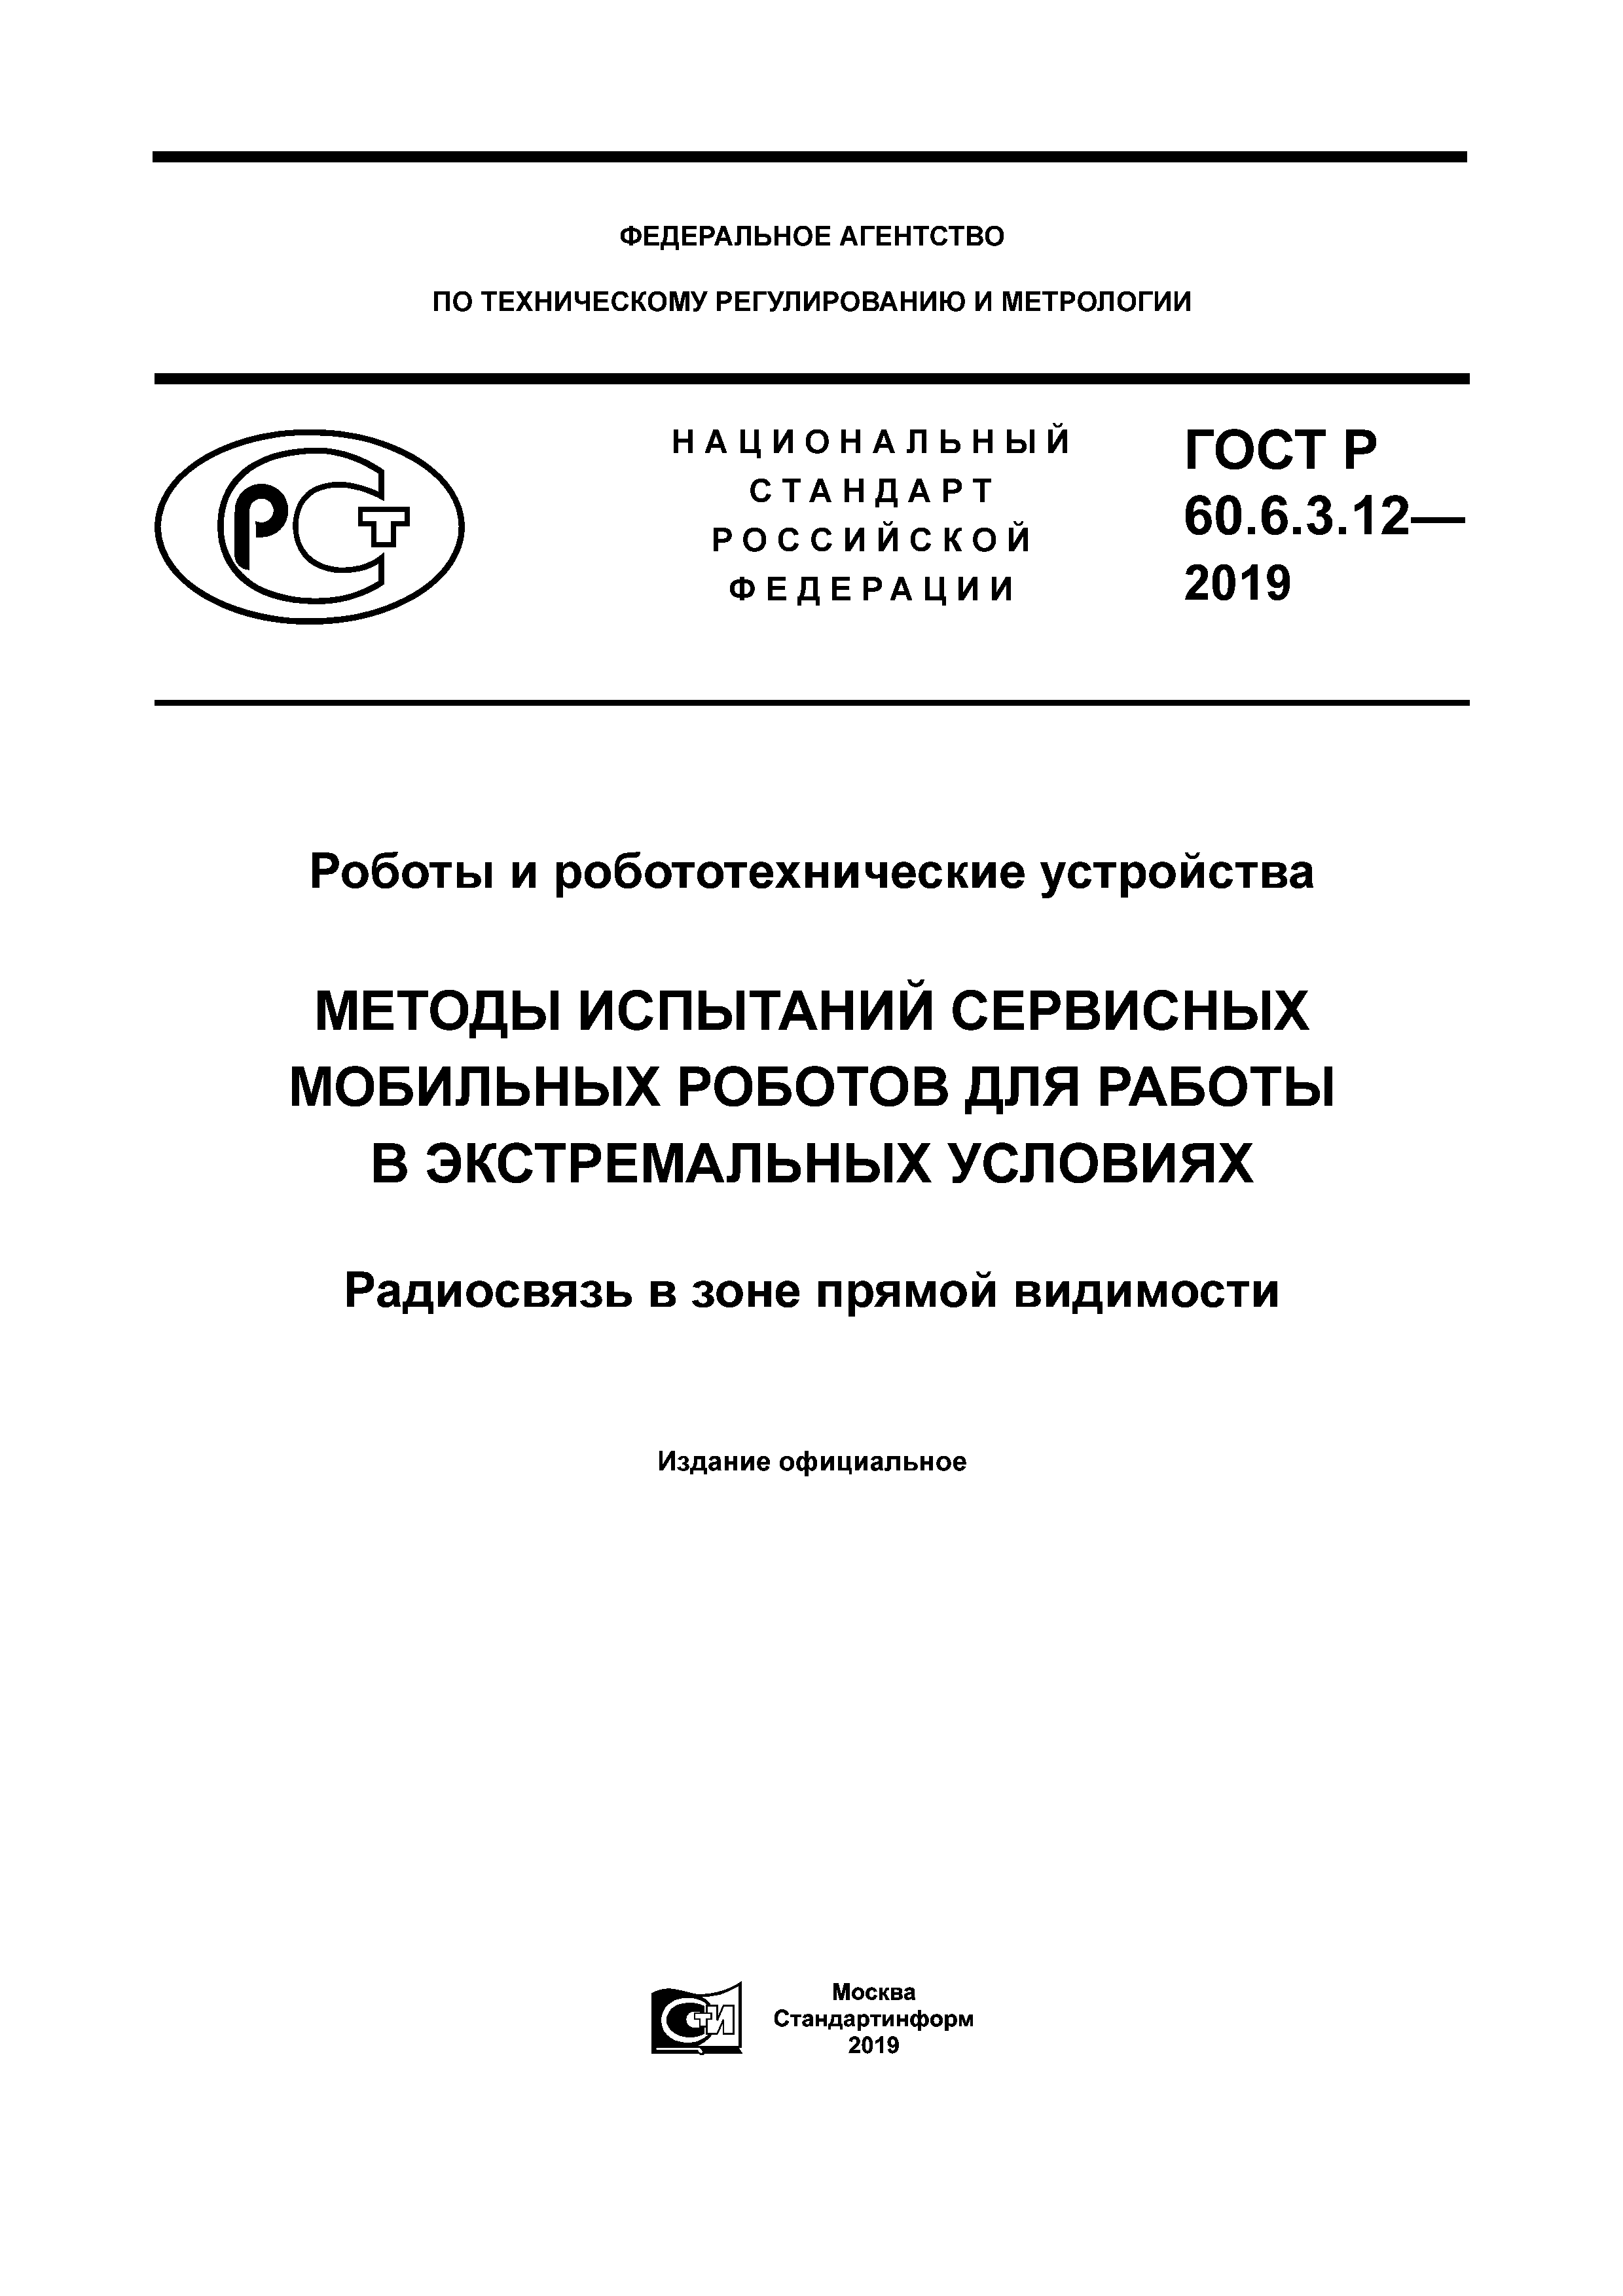 ГОСТ Р 60.6.3.12-2019